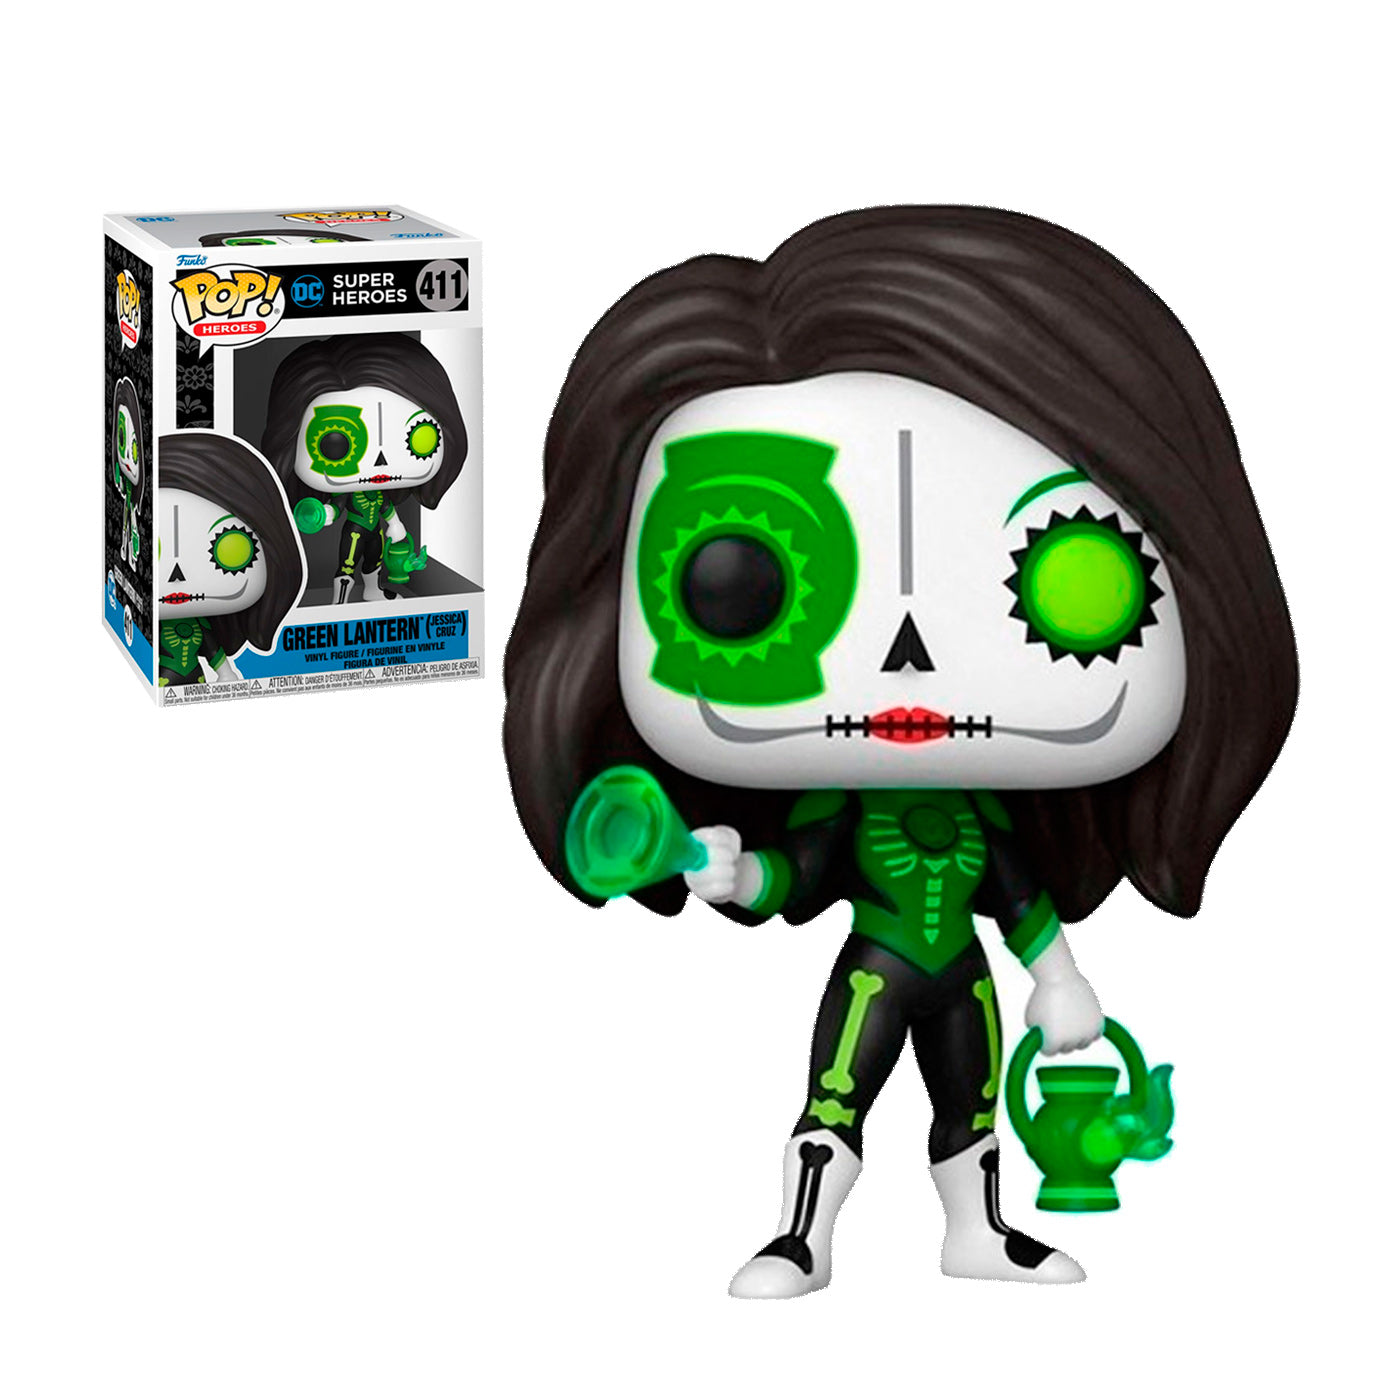 Funko Pop: Green Lantern Jessica Cruz (411)